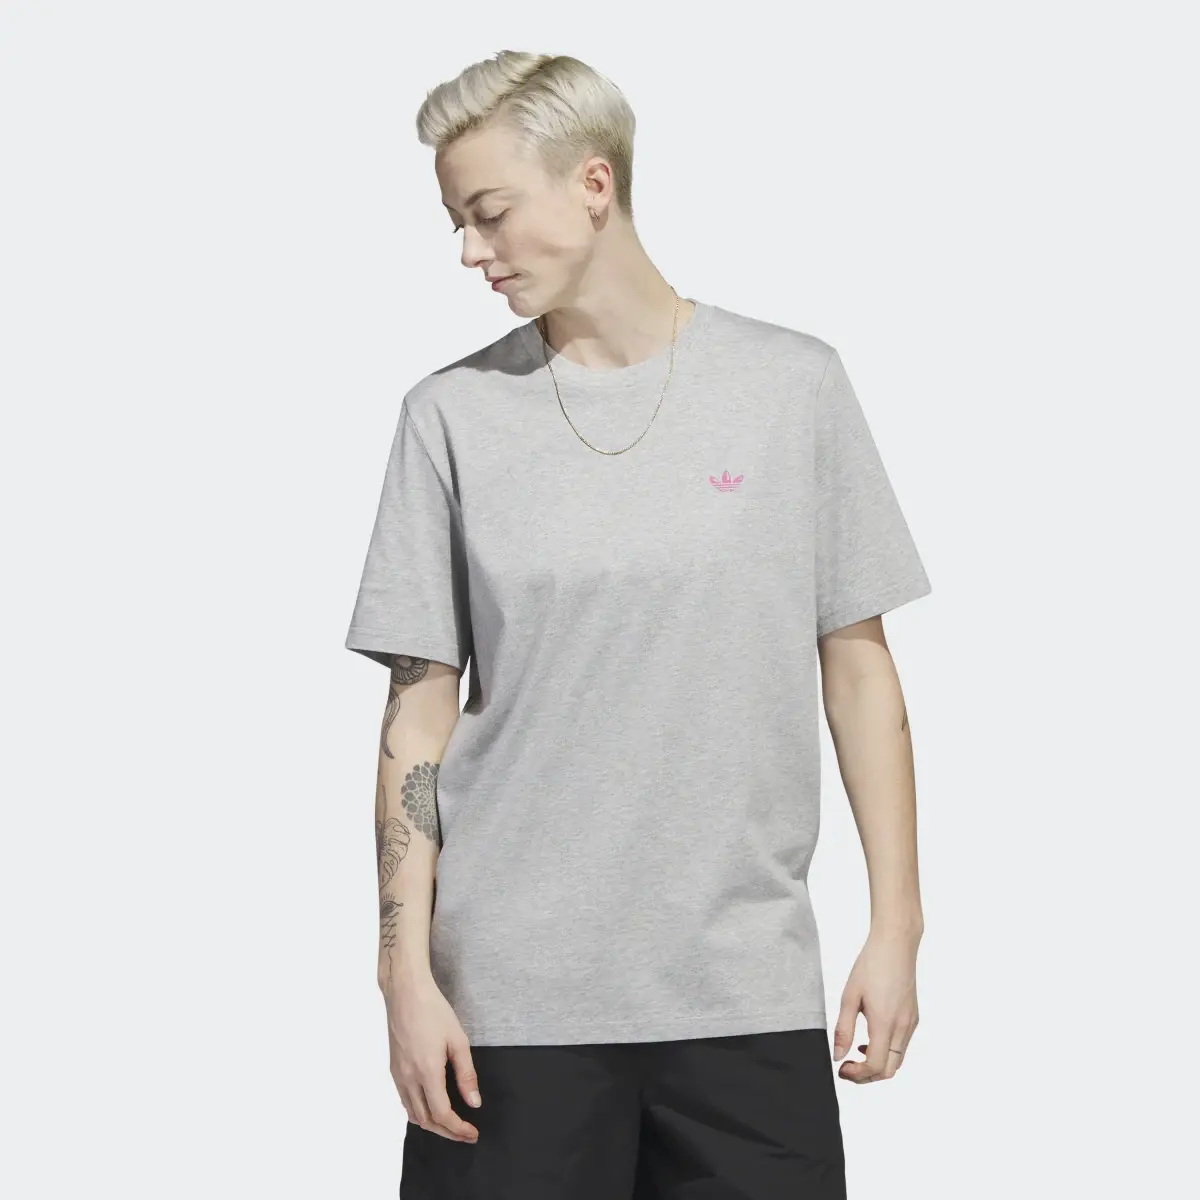 Adidas T-shirt 4.0. 2